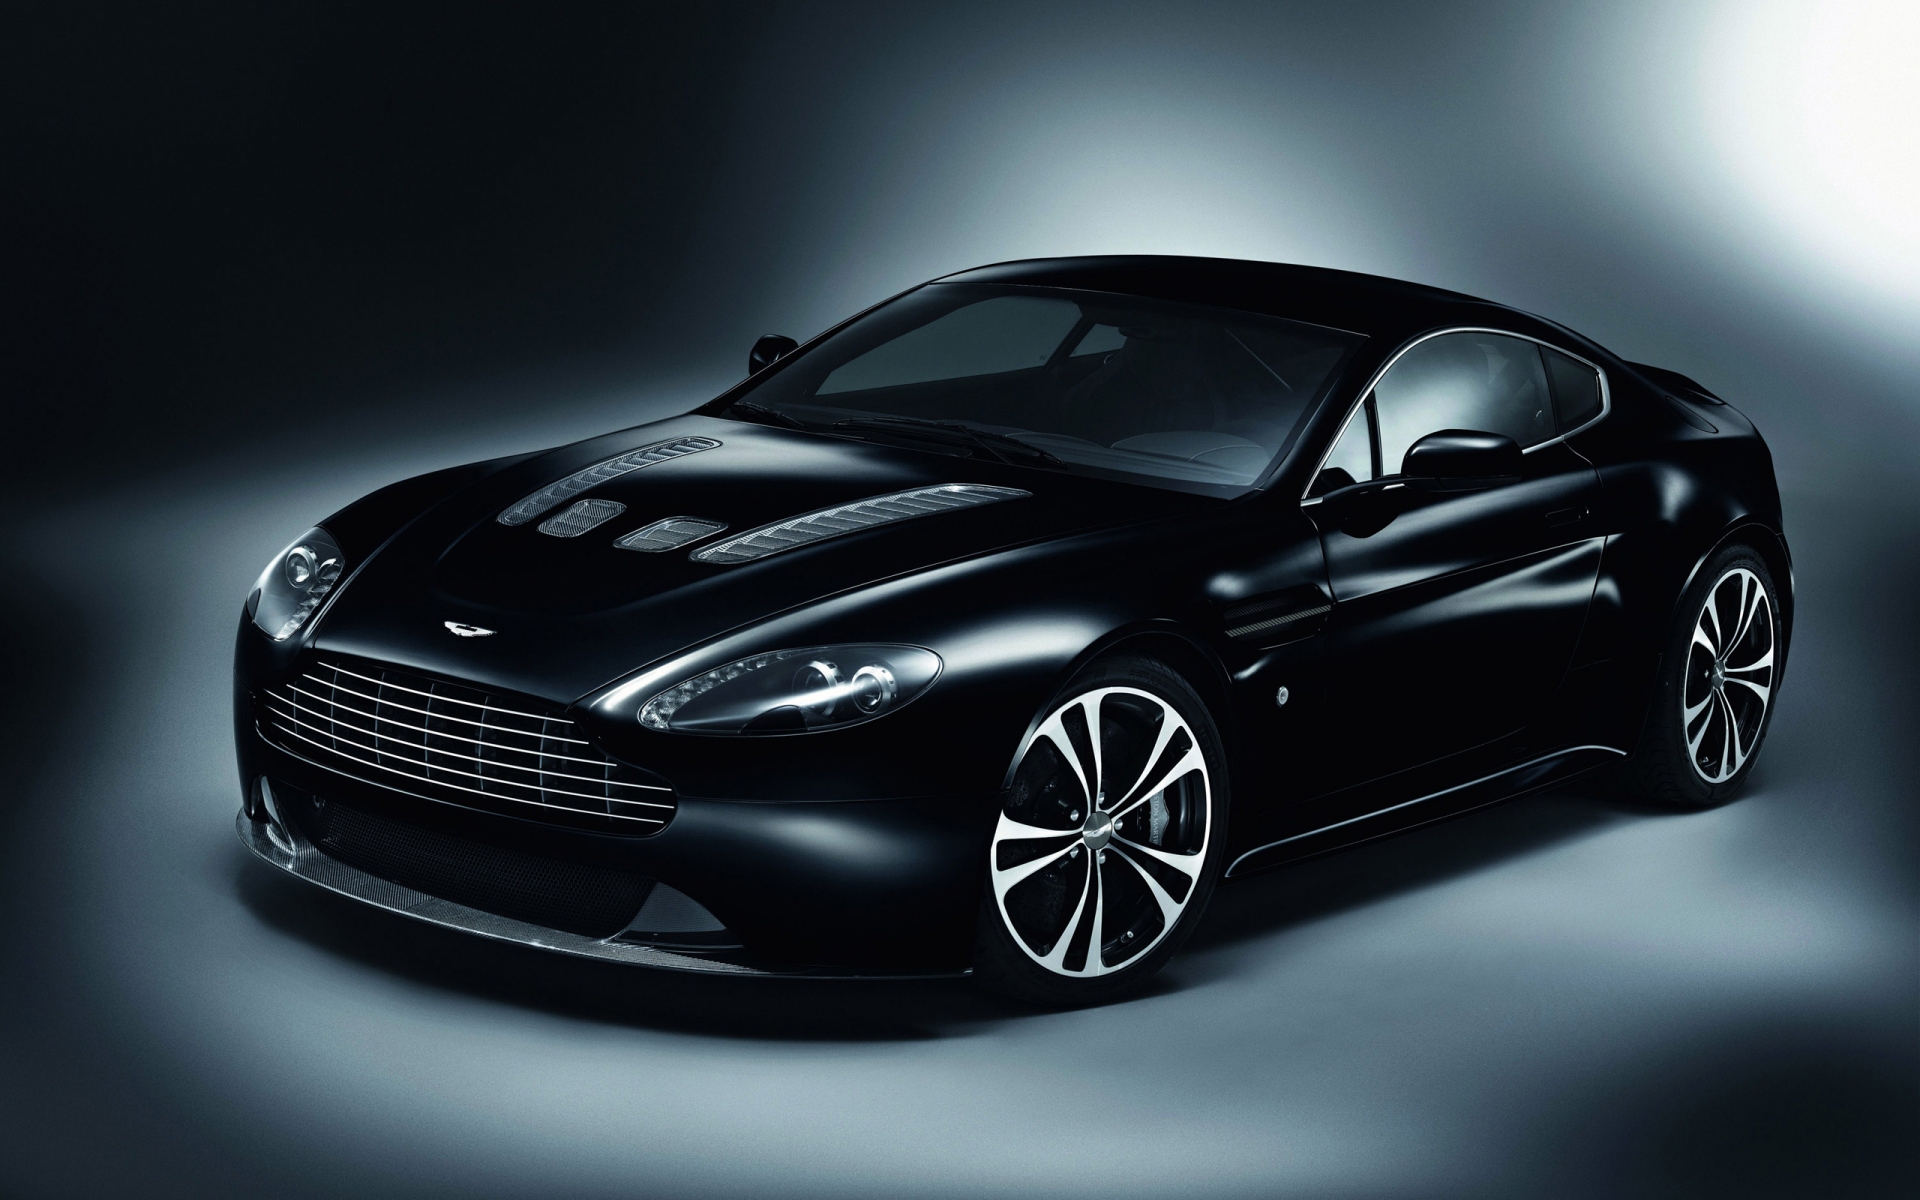 Aston Martin V12 Vantage Carbon Black for 1920 x 1200 widescreen resolution